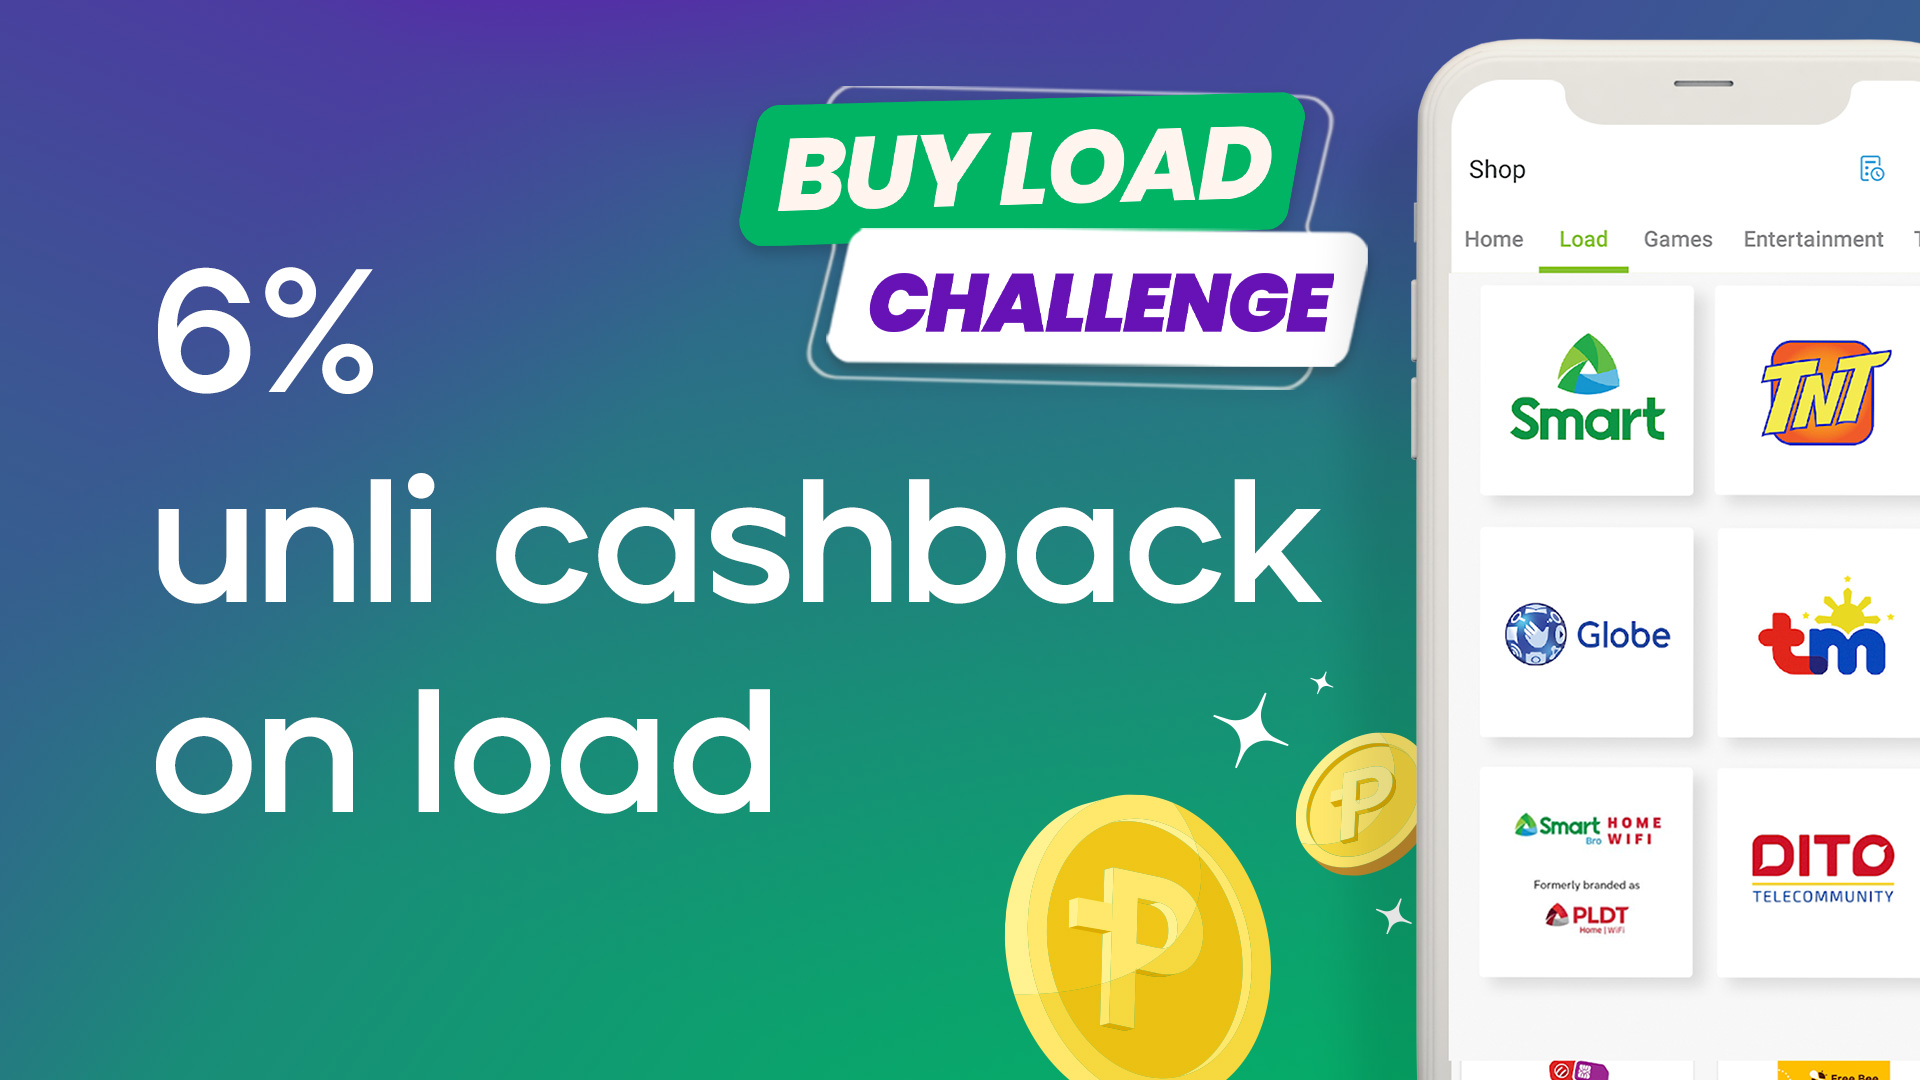 Get 6% unli cashback on prepaid load!